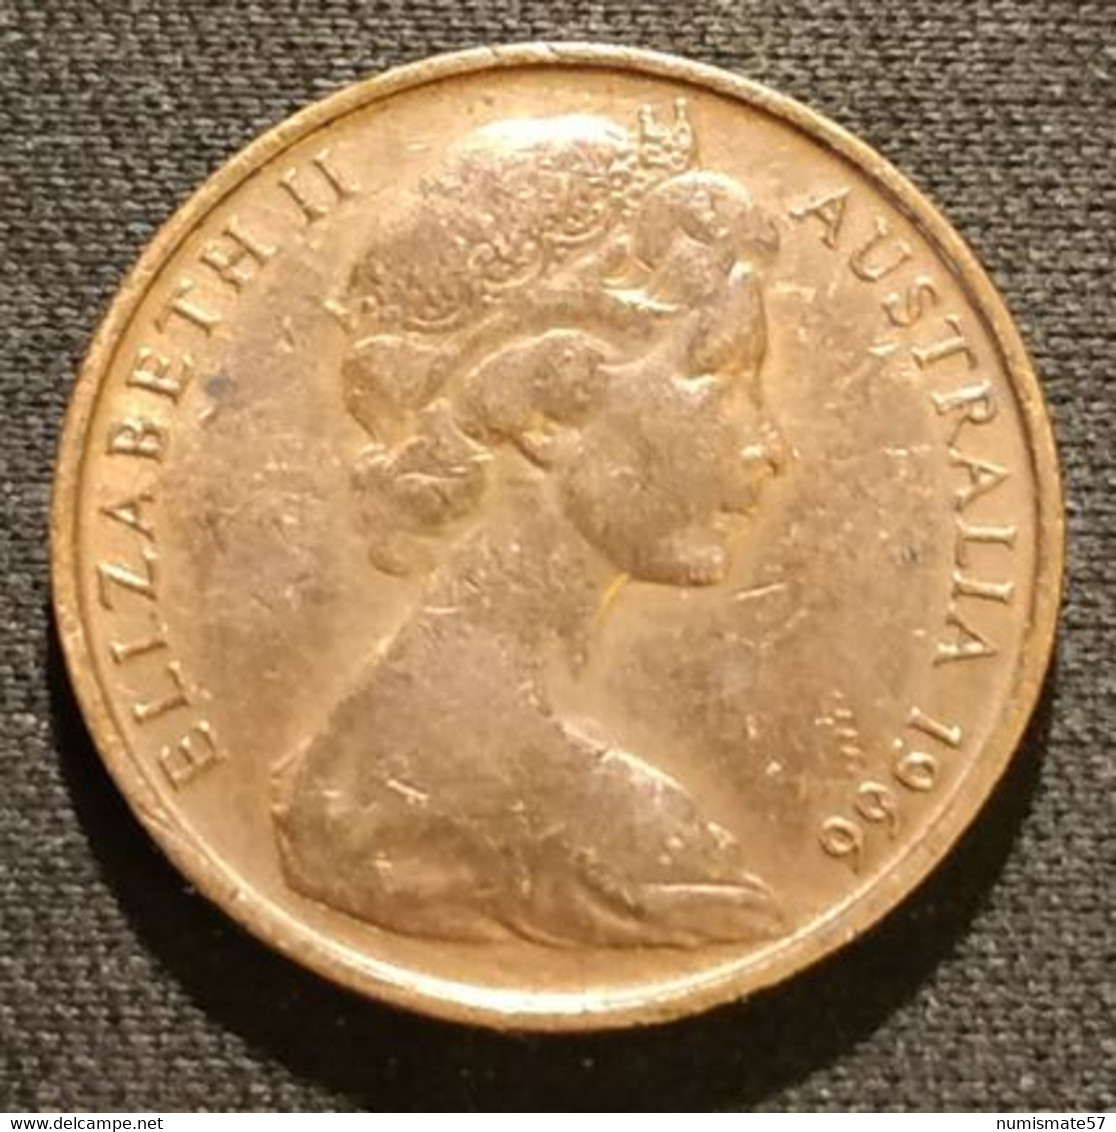 AUSTRALIE - AUSTRALIA - 2 CENTS 1966 - Elizabeth II - KM 63 - 2 Cents